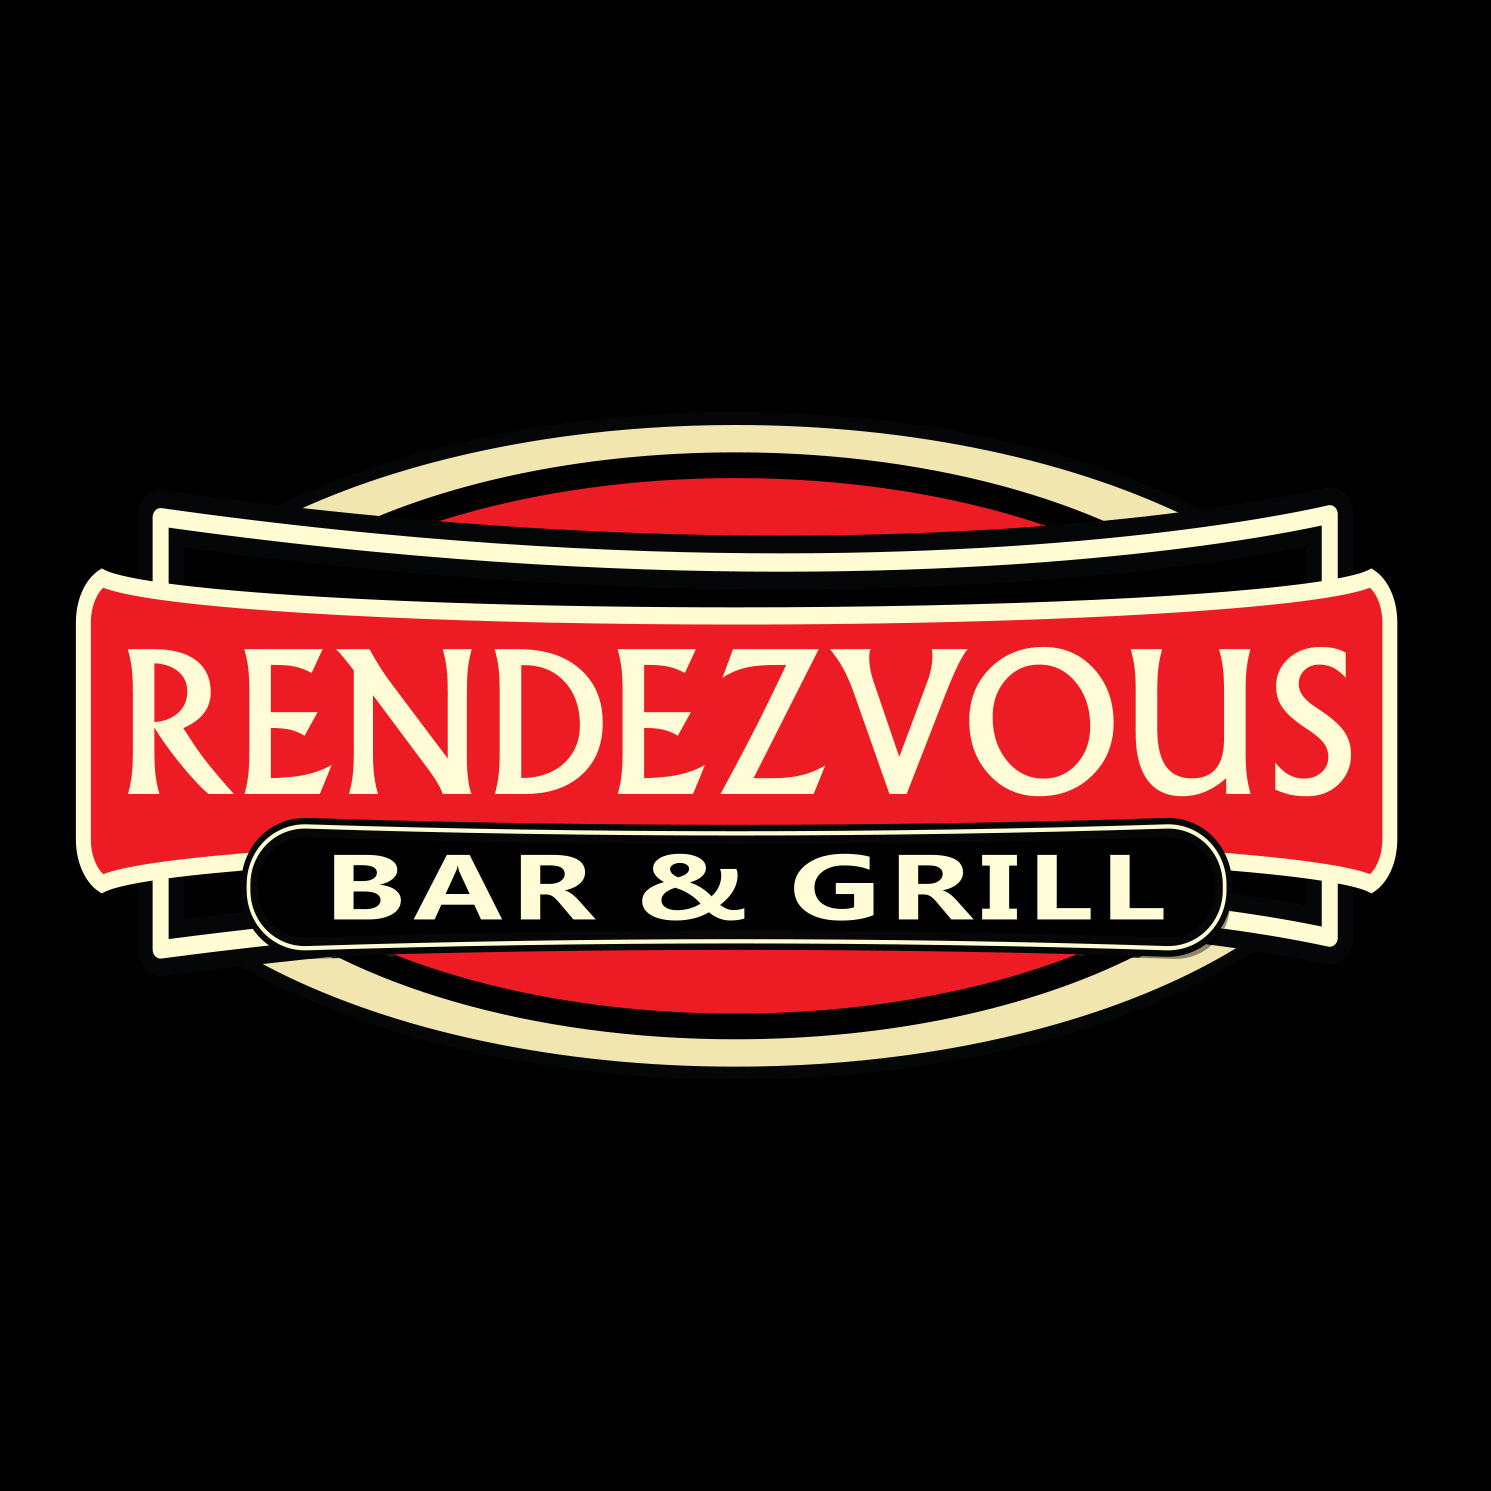 Rendezvous Bar & Grill.jpg